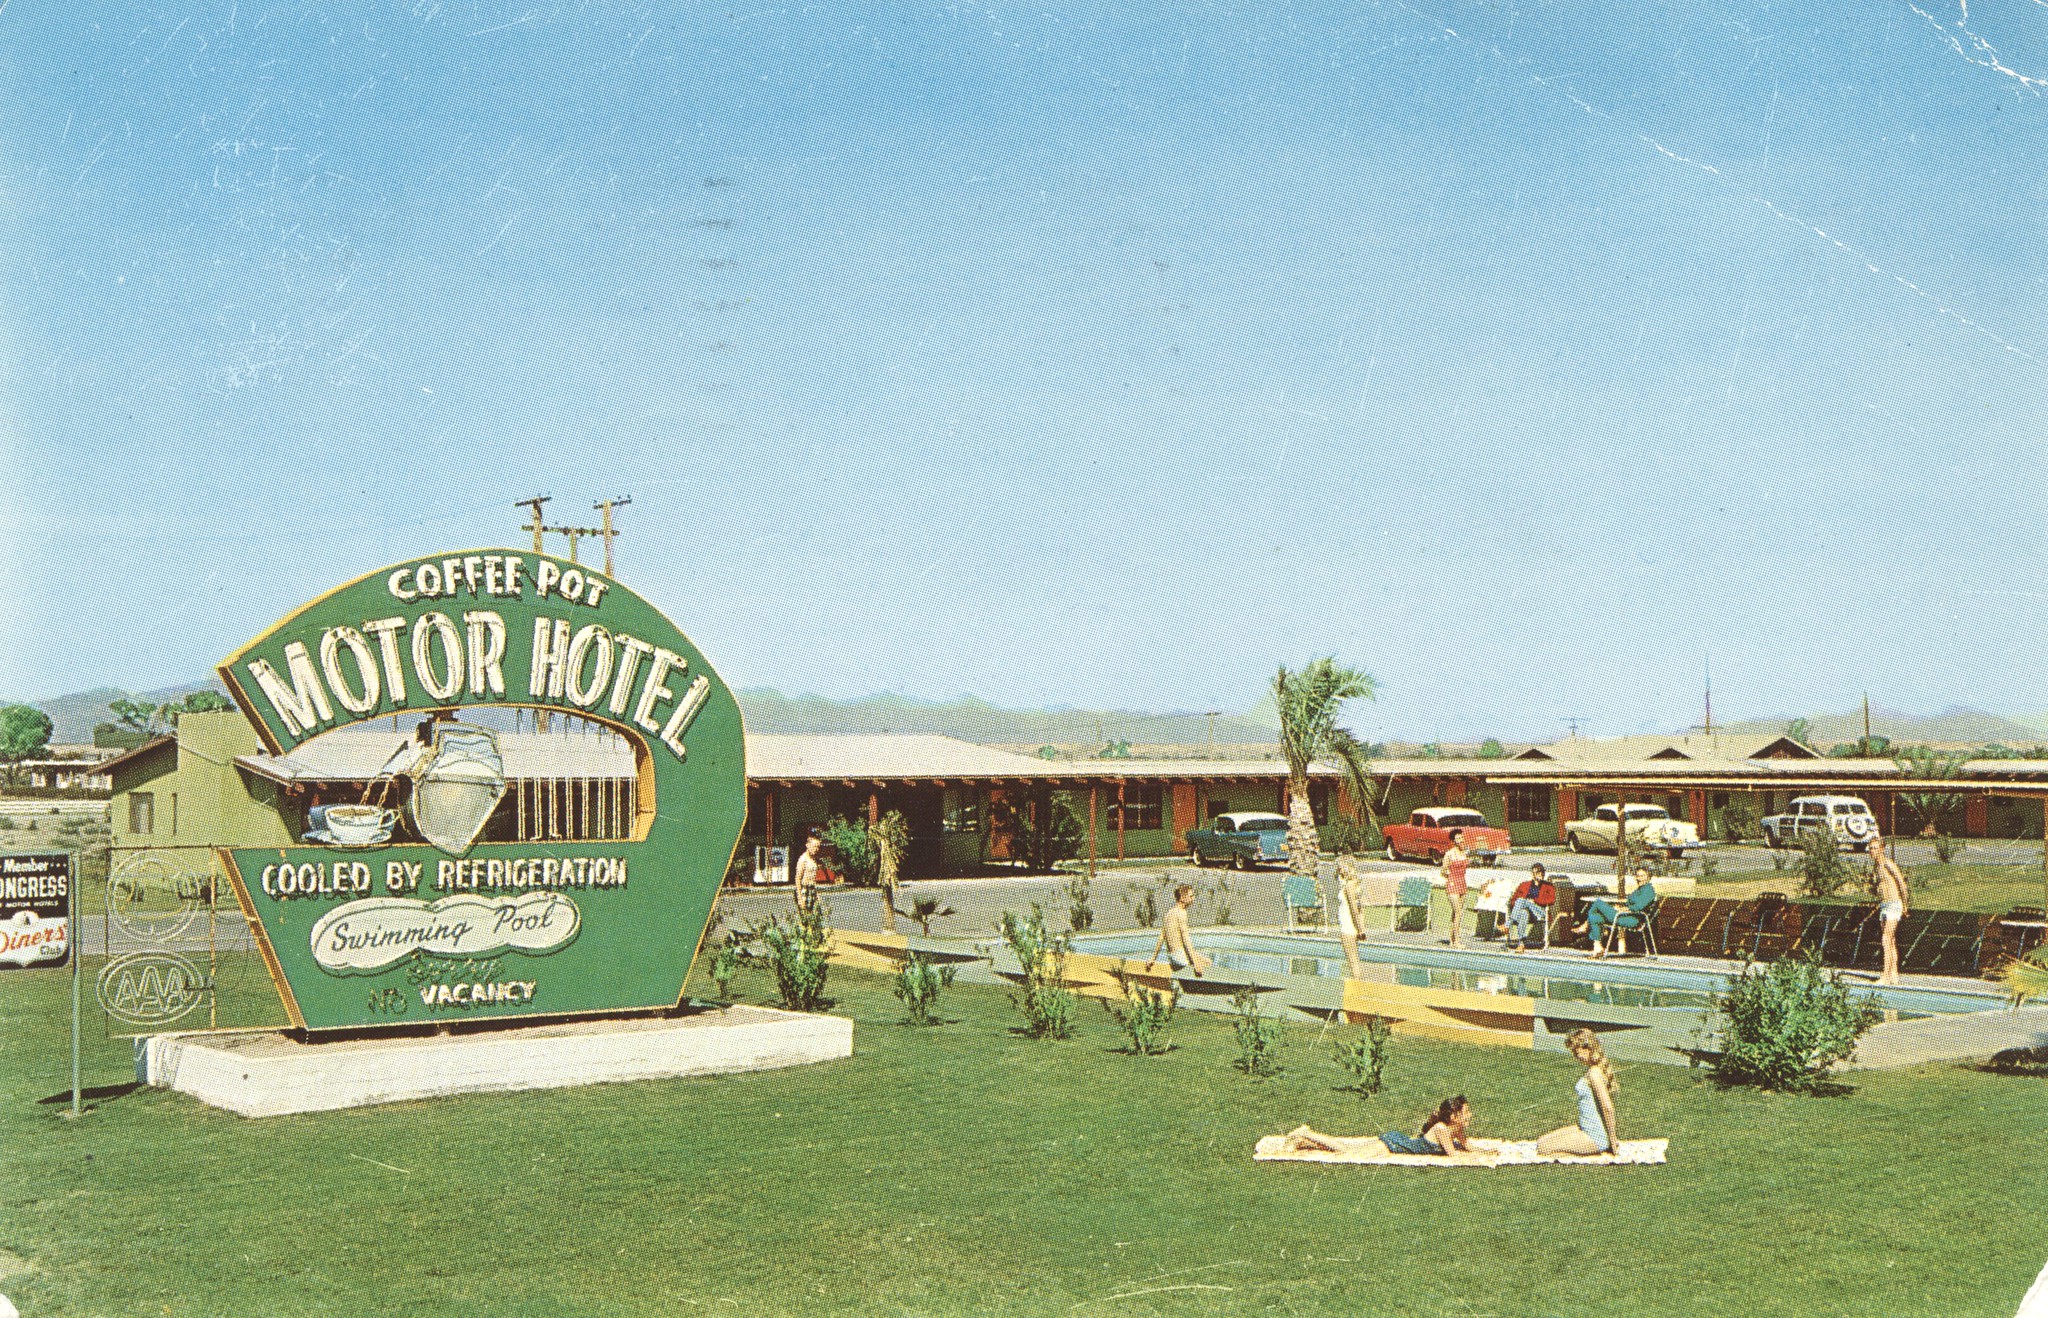 Coffee Pot Motor Hotel - 2421 West Hobsonway, Blythe, California U.S.A. - postmarked 1961, likely ca. 1950s) 